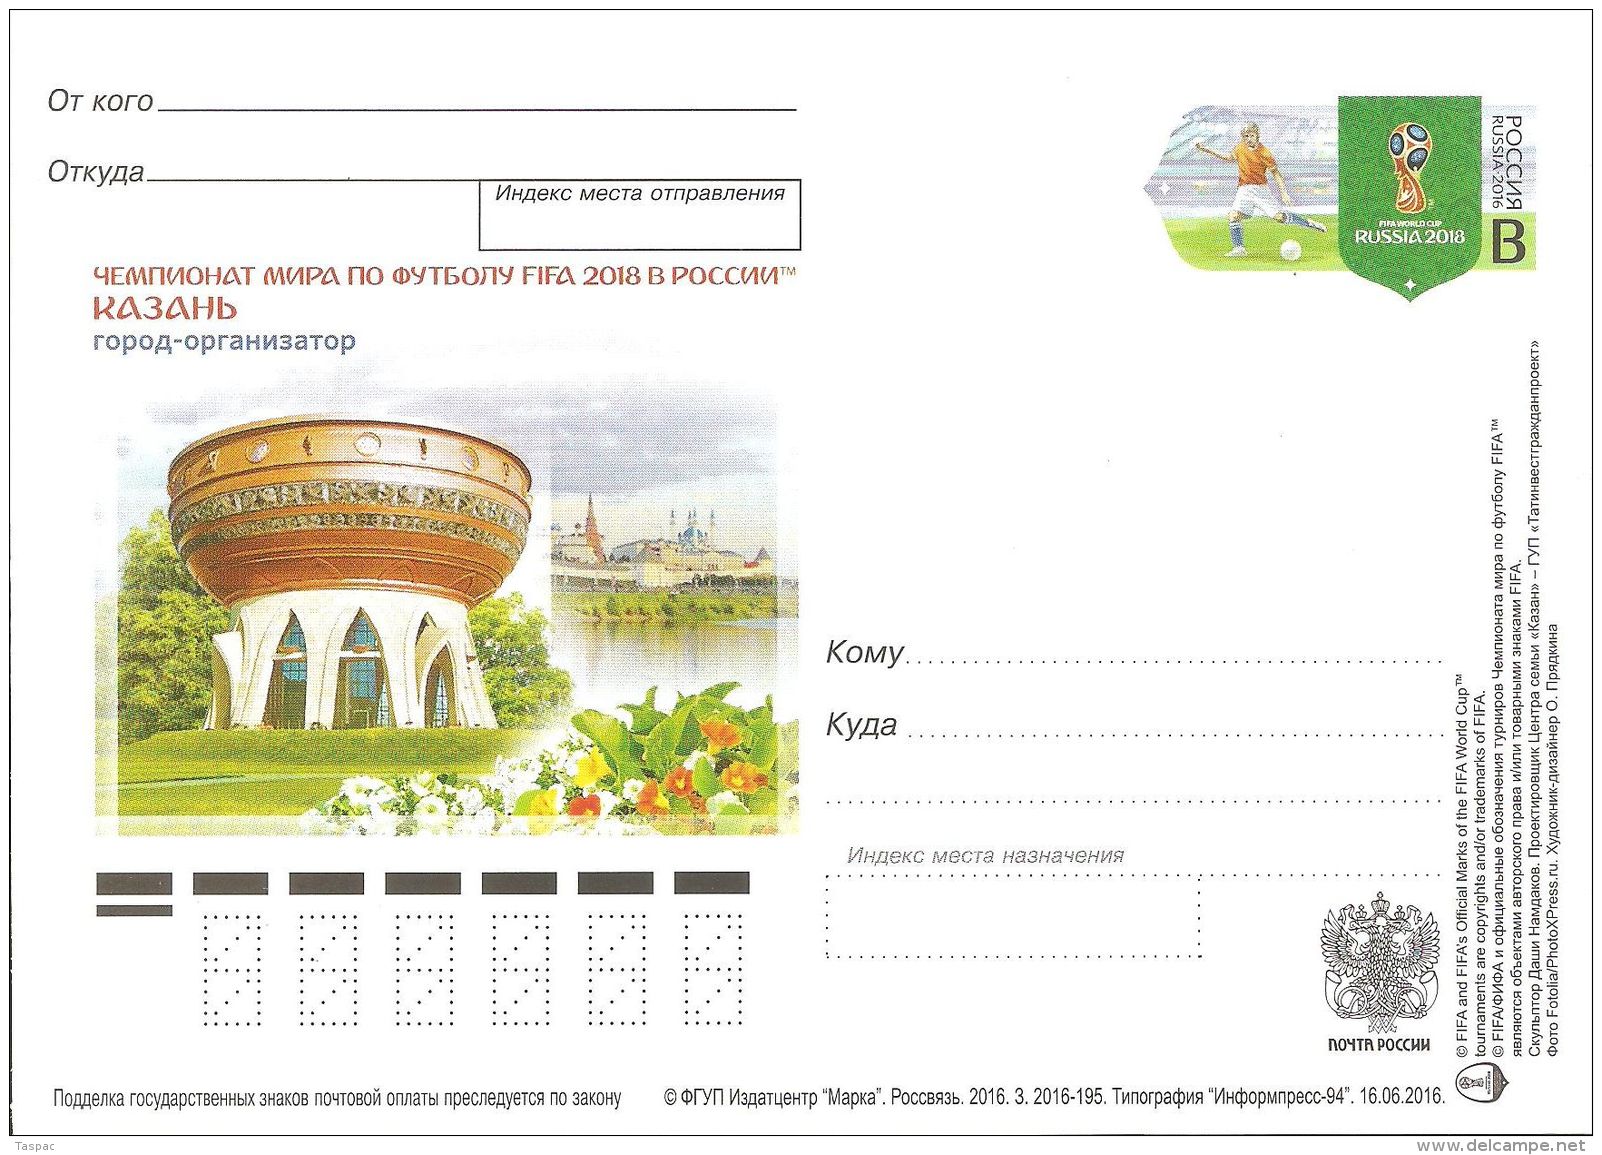 Russia 2016 # 195 Postal Stationery Postcard Unused - World Cup Soccer Championship 2018 / Kazan - 2018 – Rusland